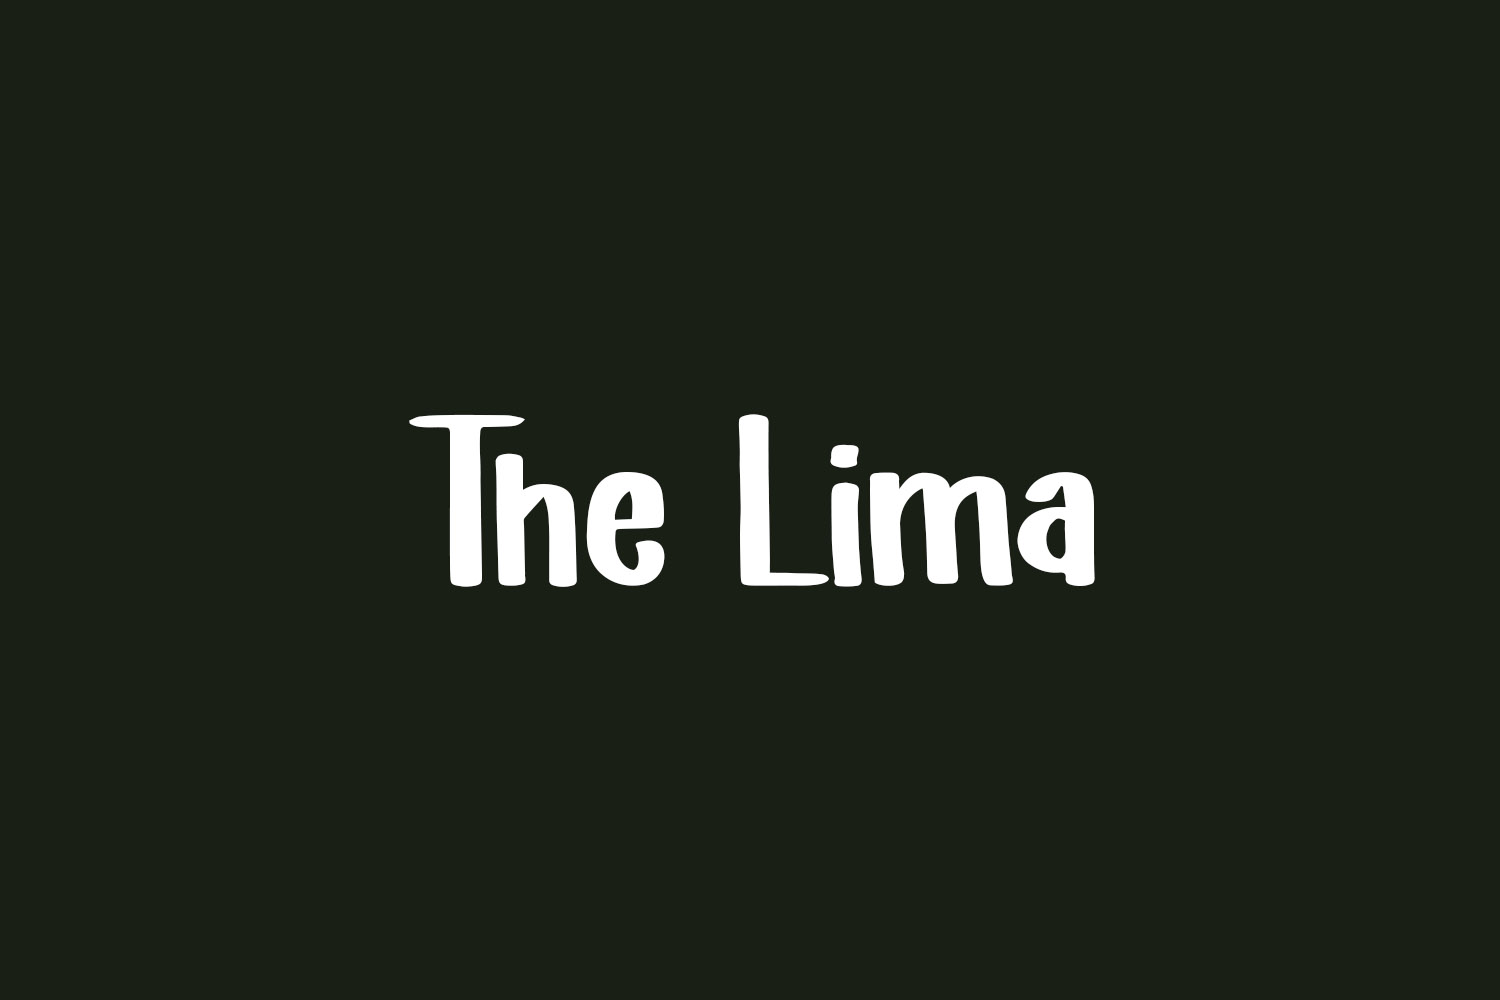 The Lima Free Font